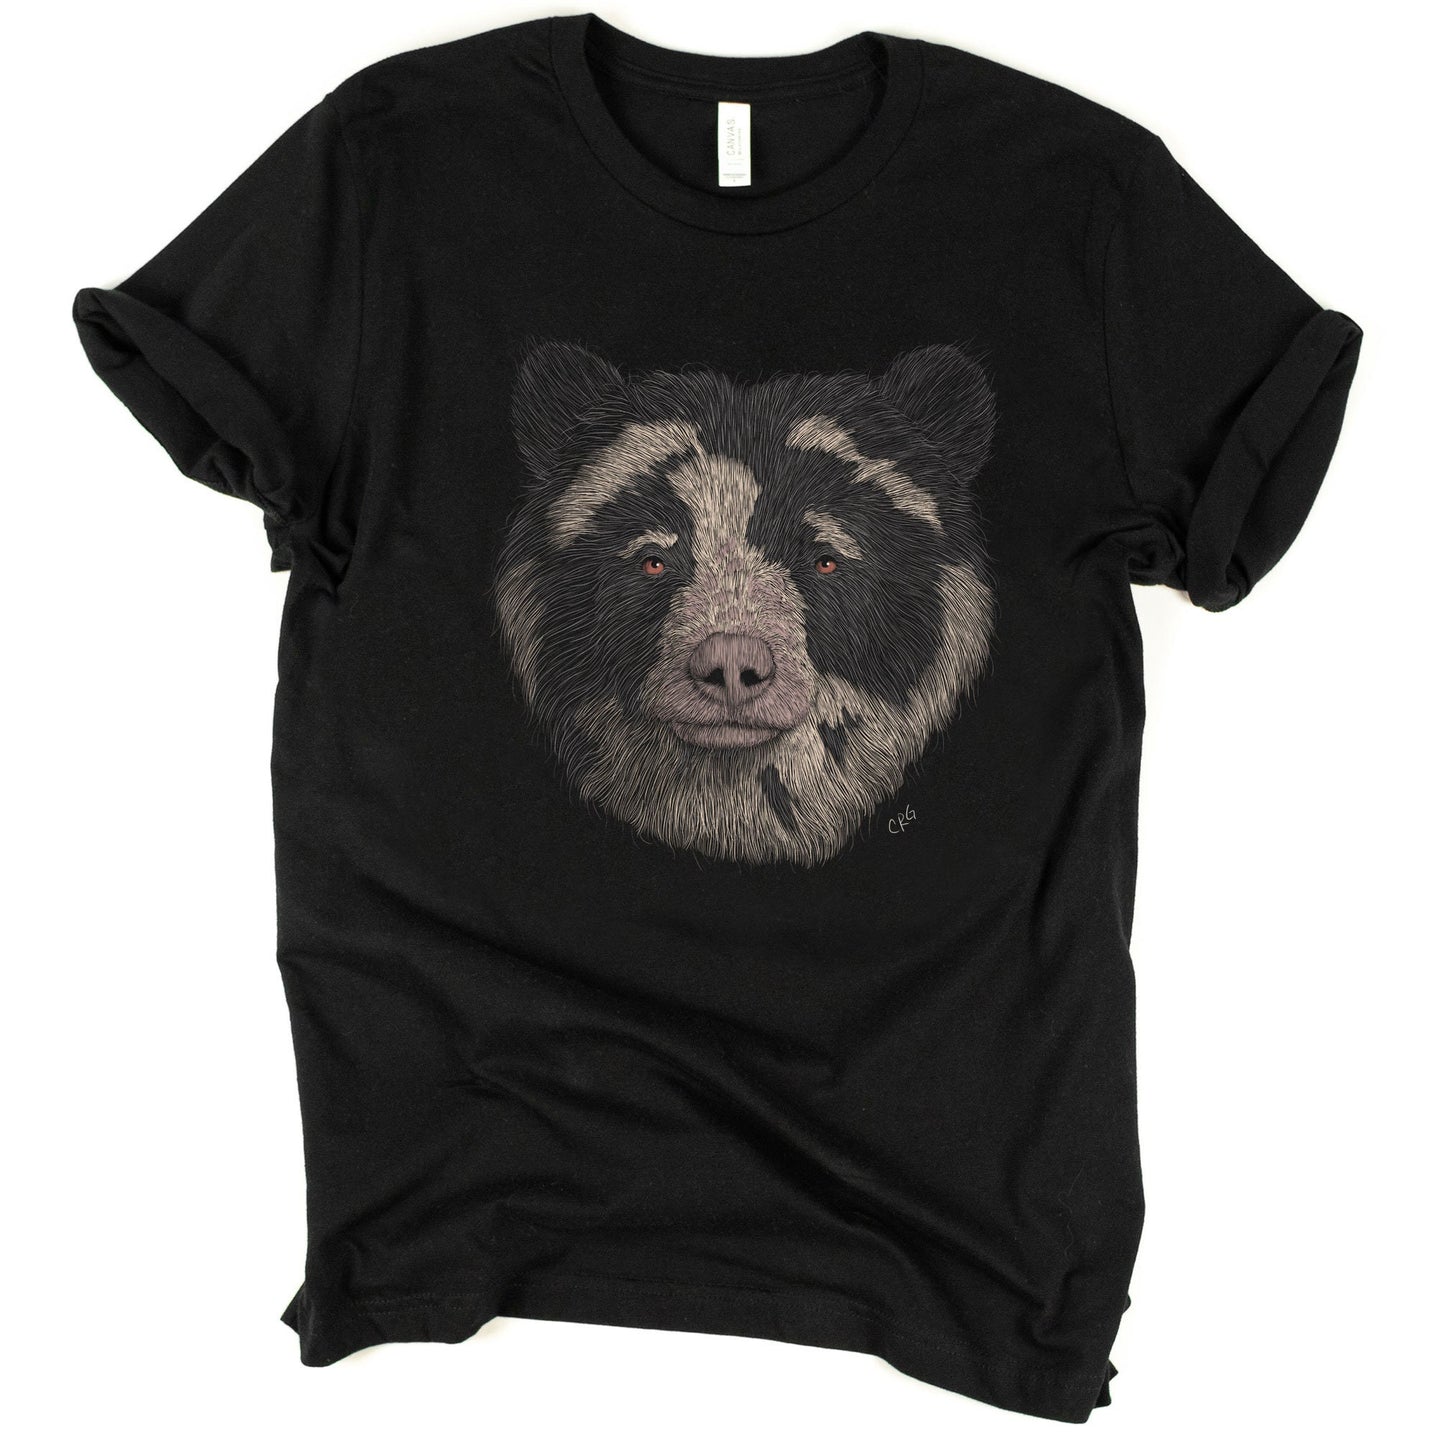 Spectacled Bear Shirt